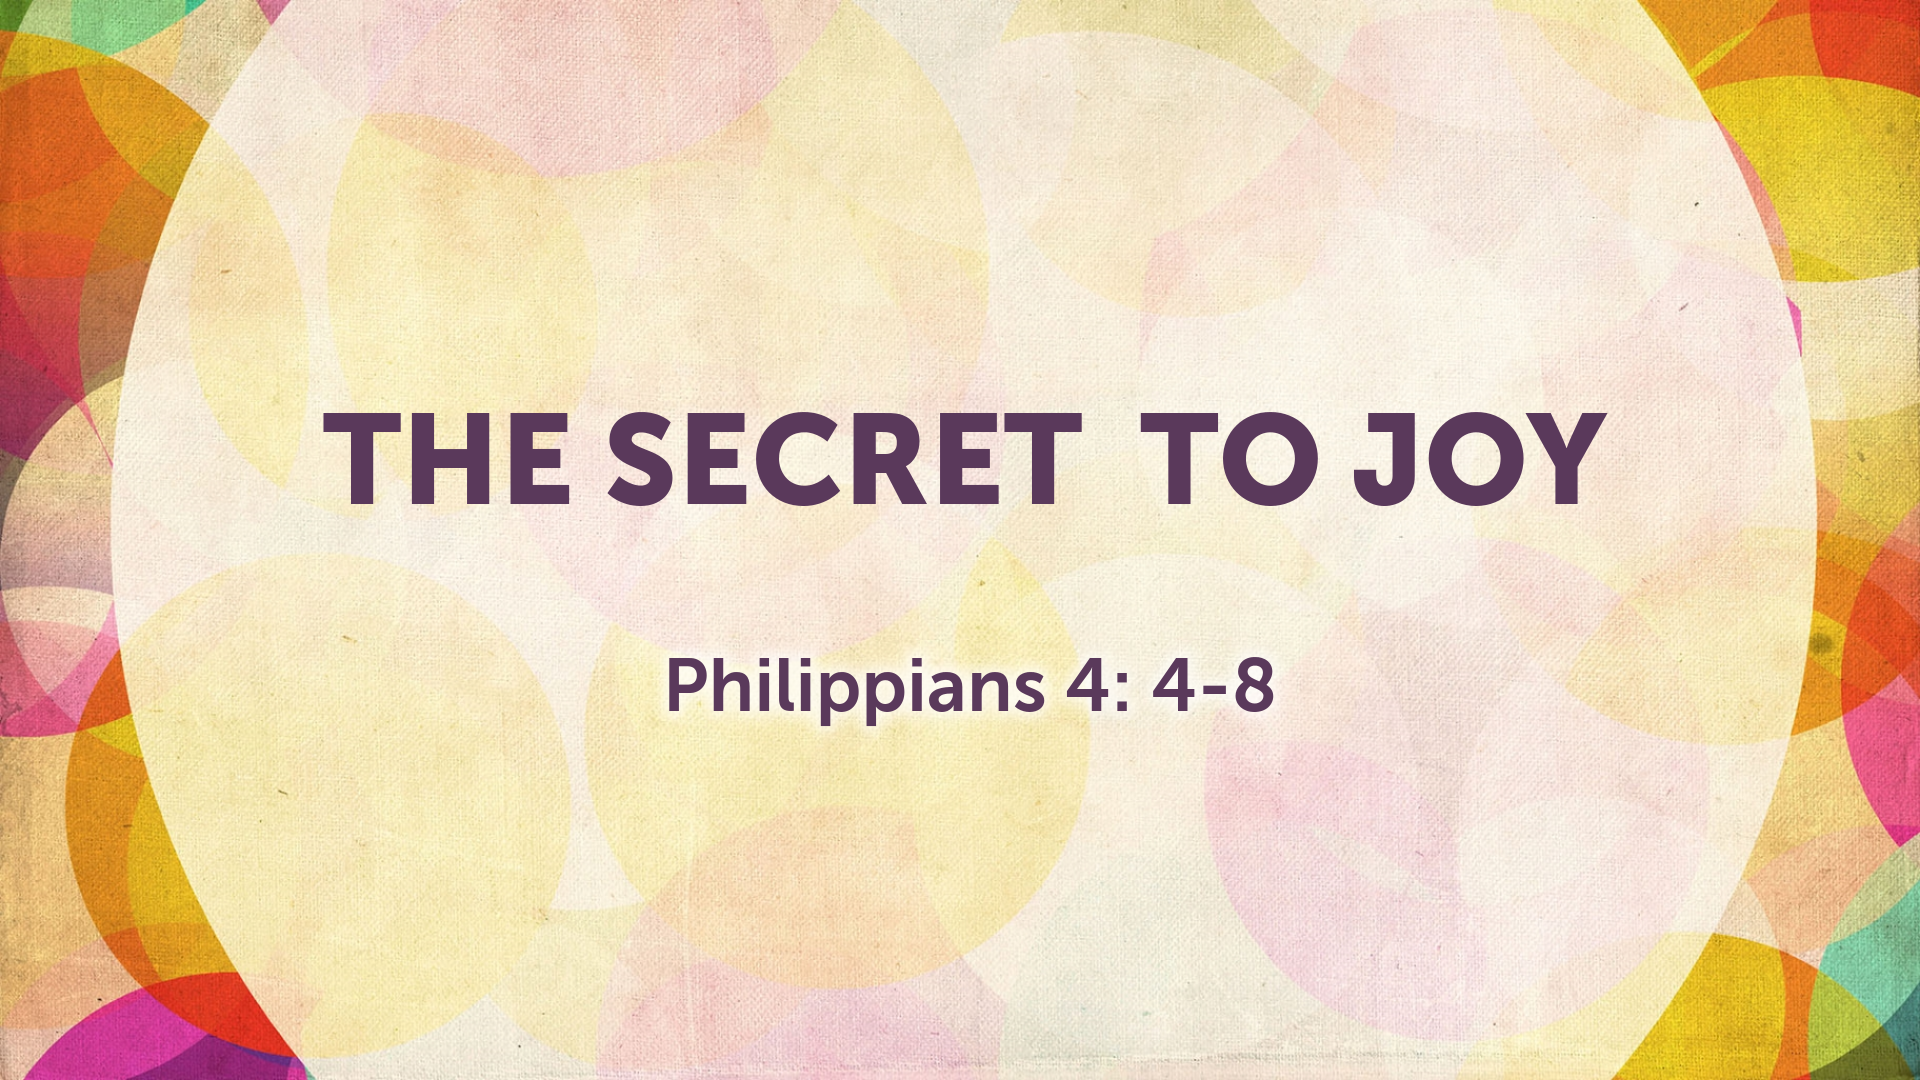 Nov 15, 2020 - The Secret To Joy (Video) - Philippians 4: 4-8